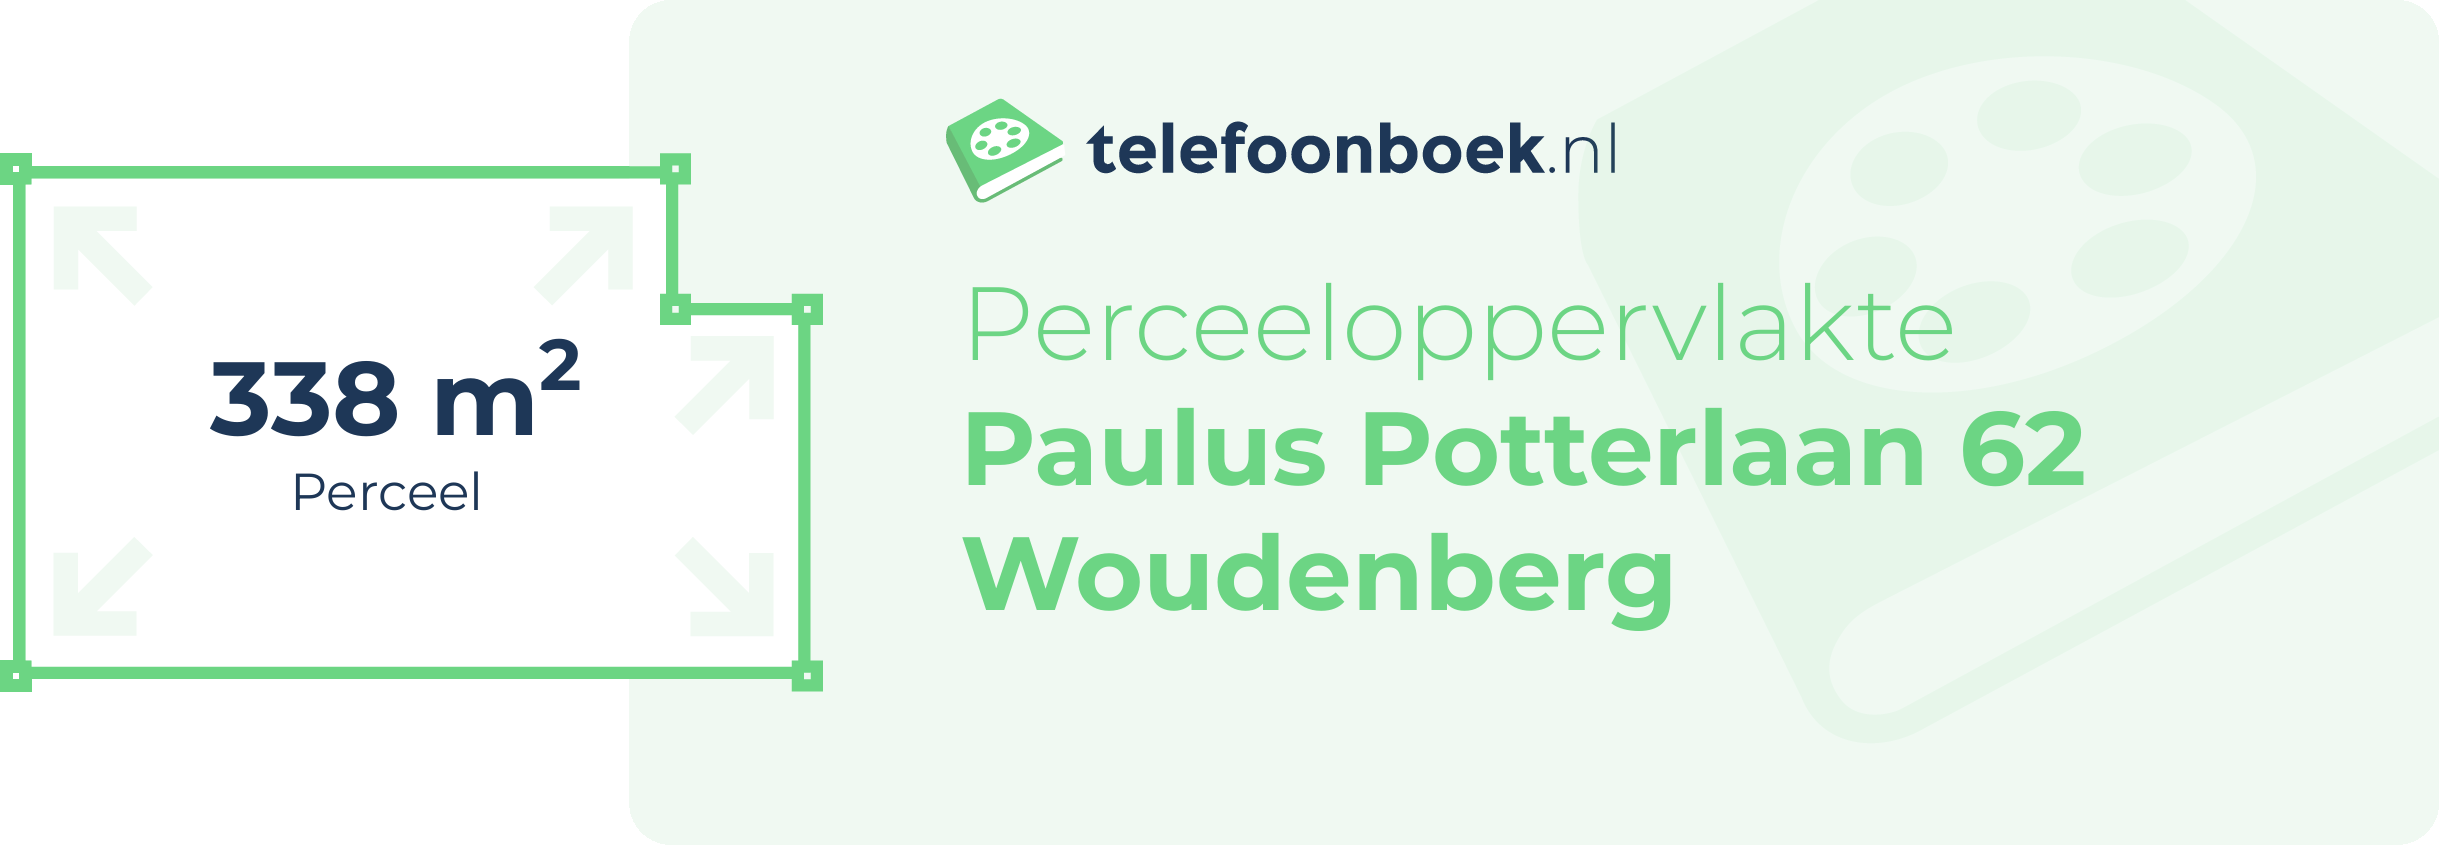 Perceeloppervlakte Paulus Potterlaan 62 Woudenberg